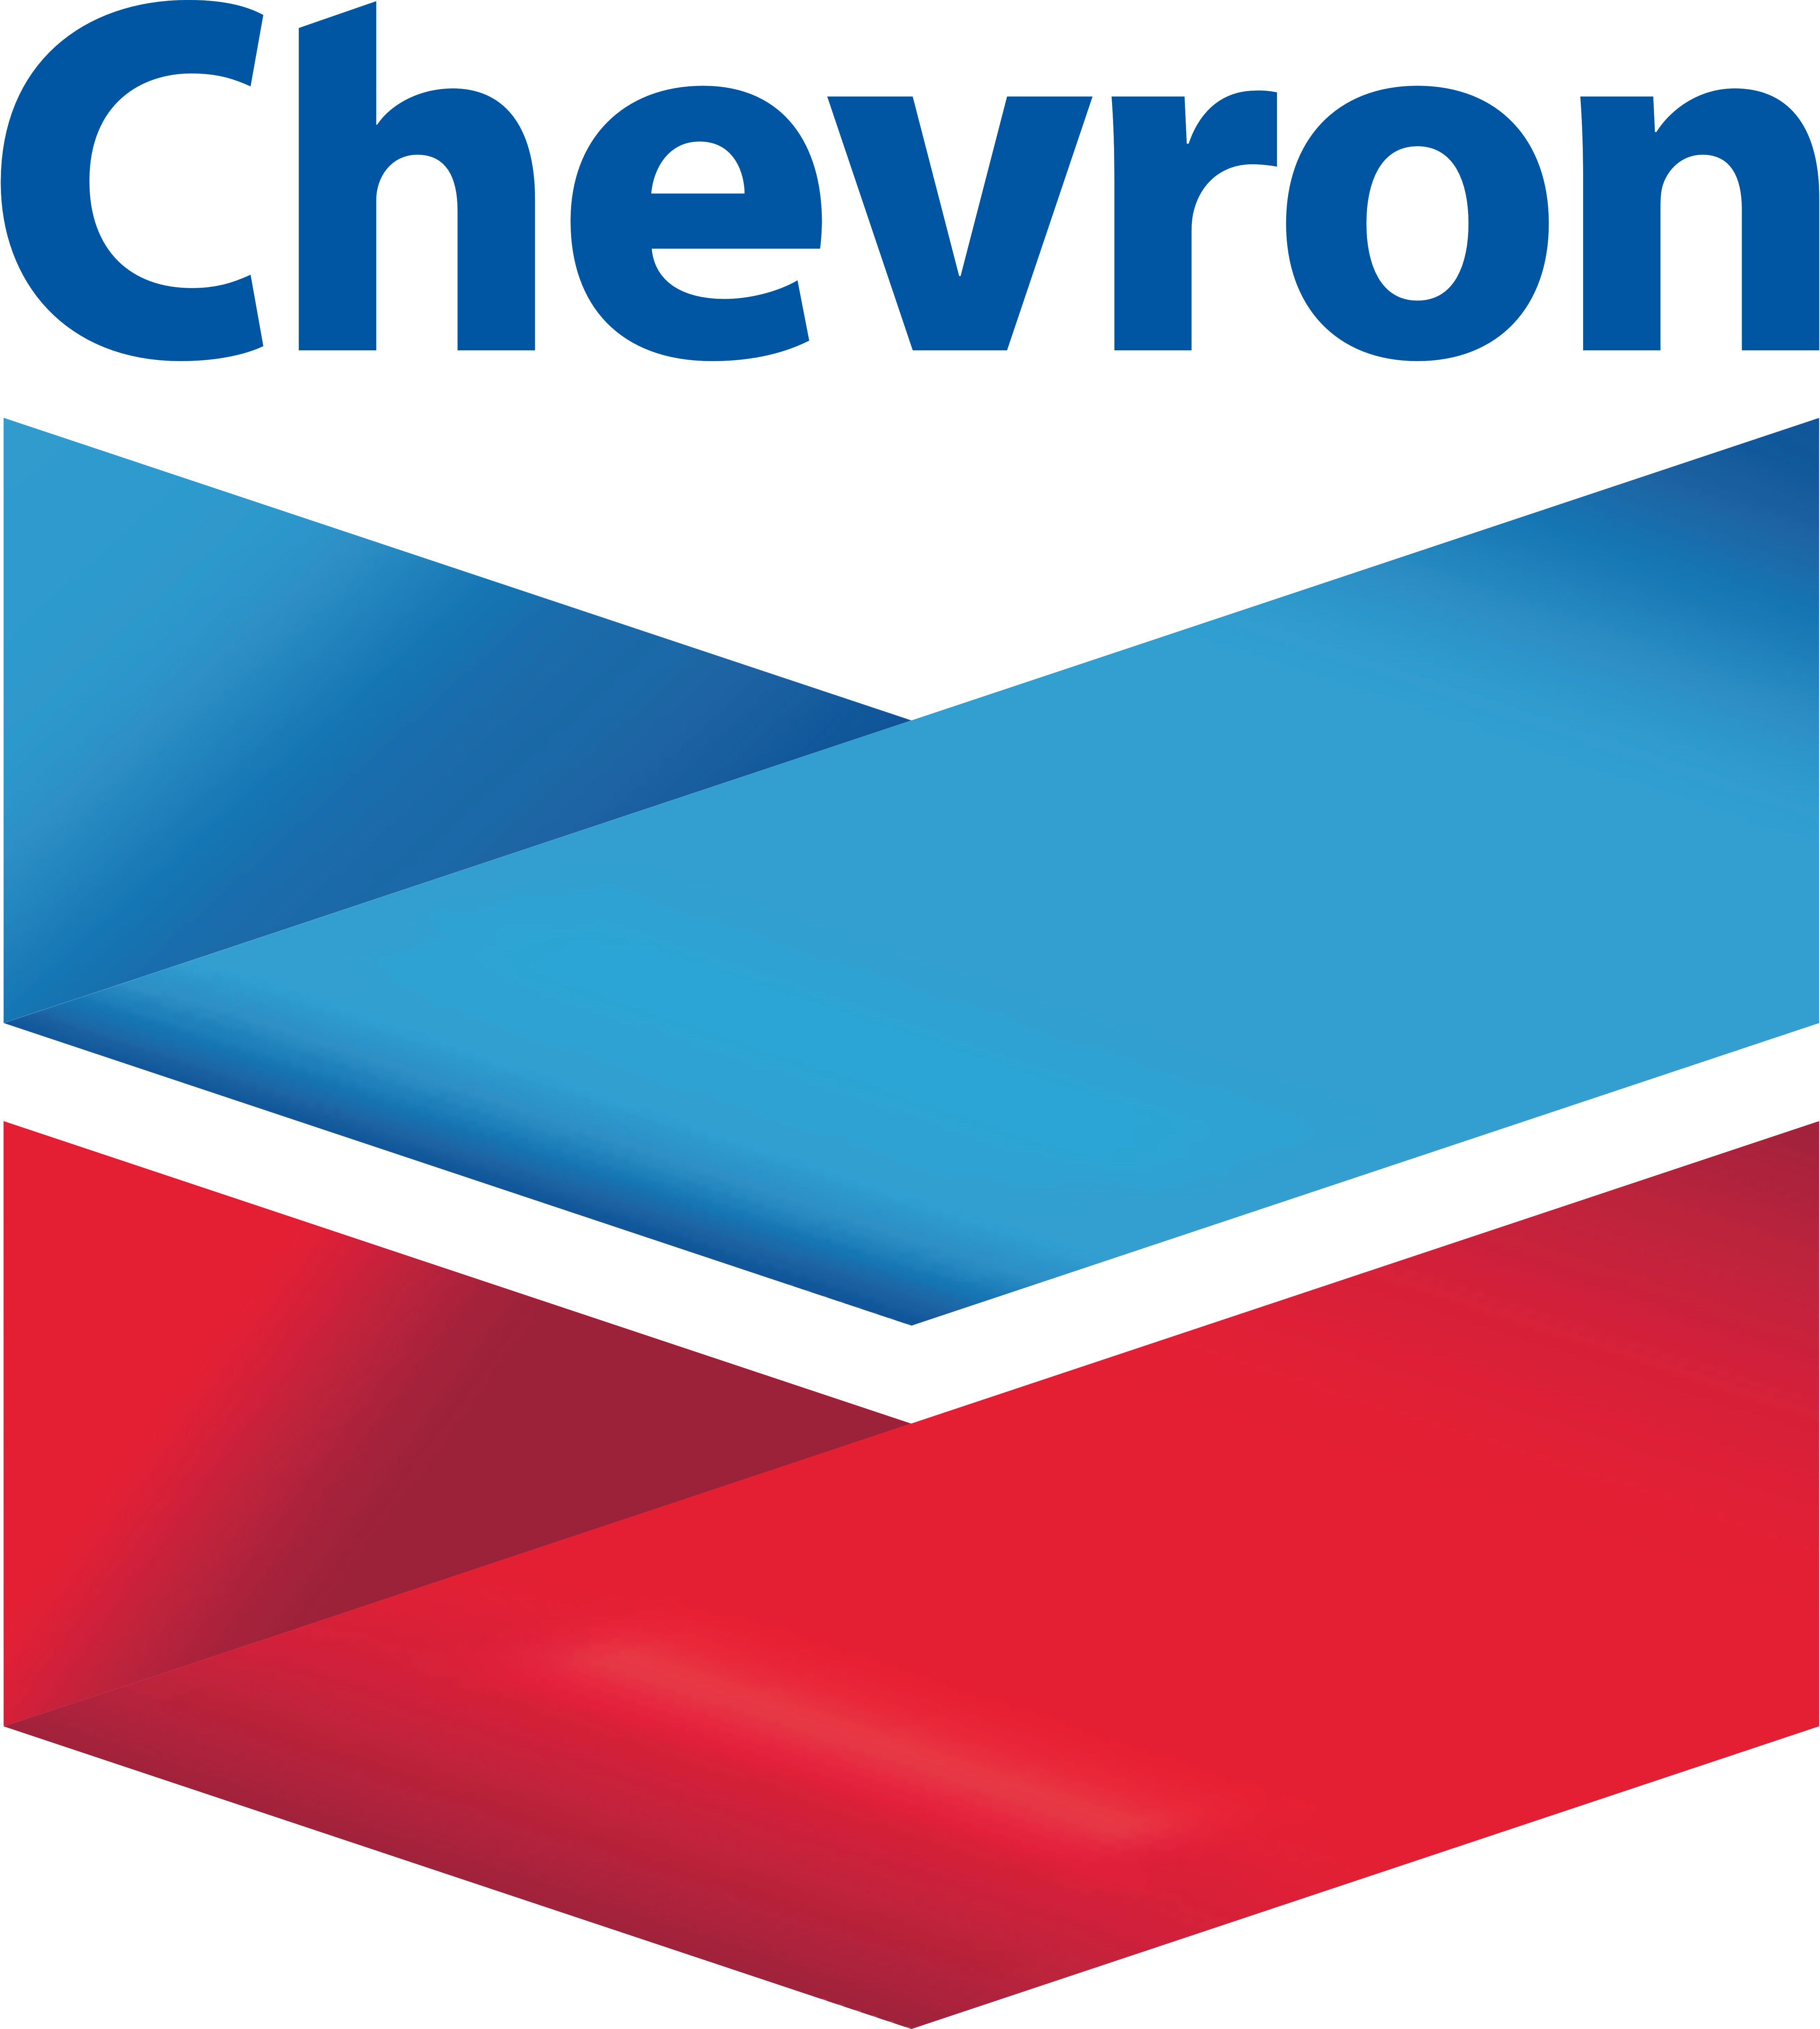 Is Chevron Oil Good